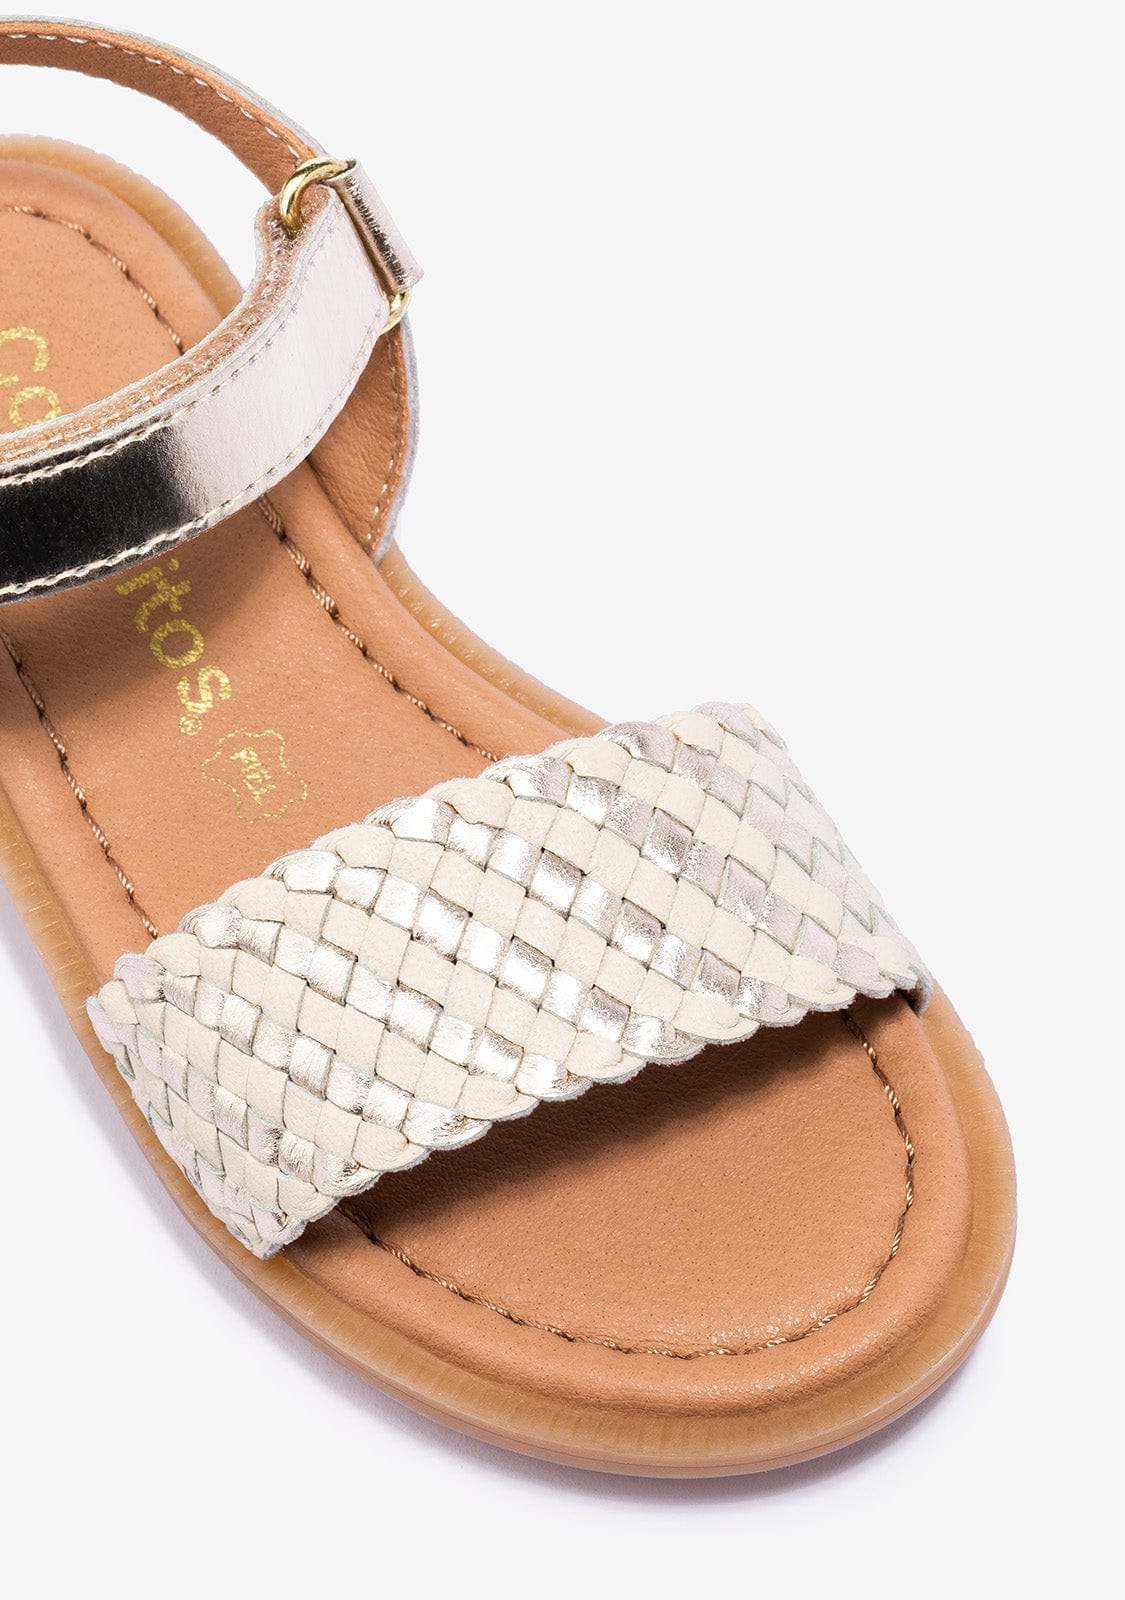 CONGUITOS Shoes Girl's Gold Beige Sandals Napa